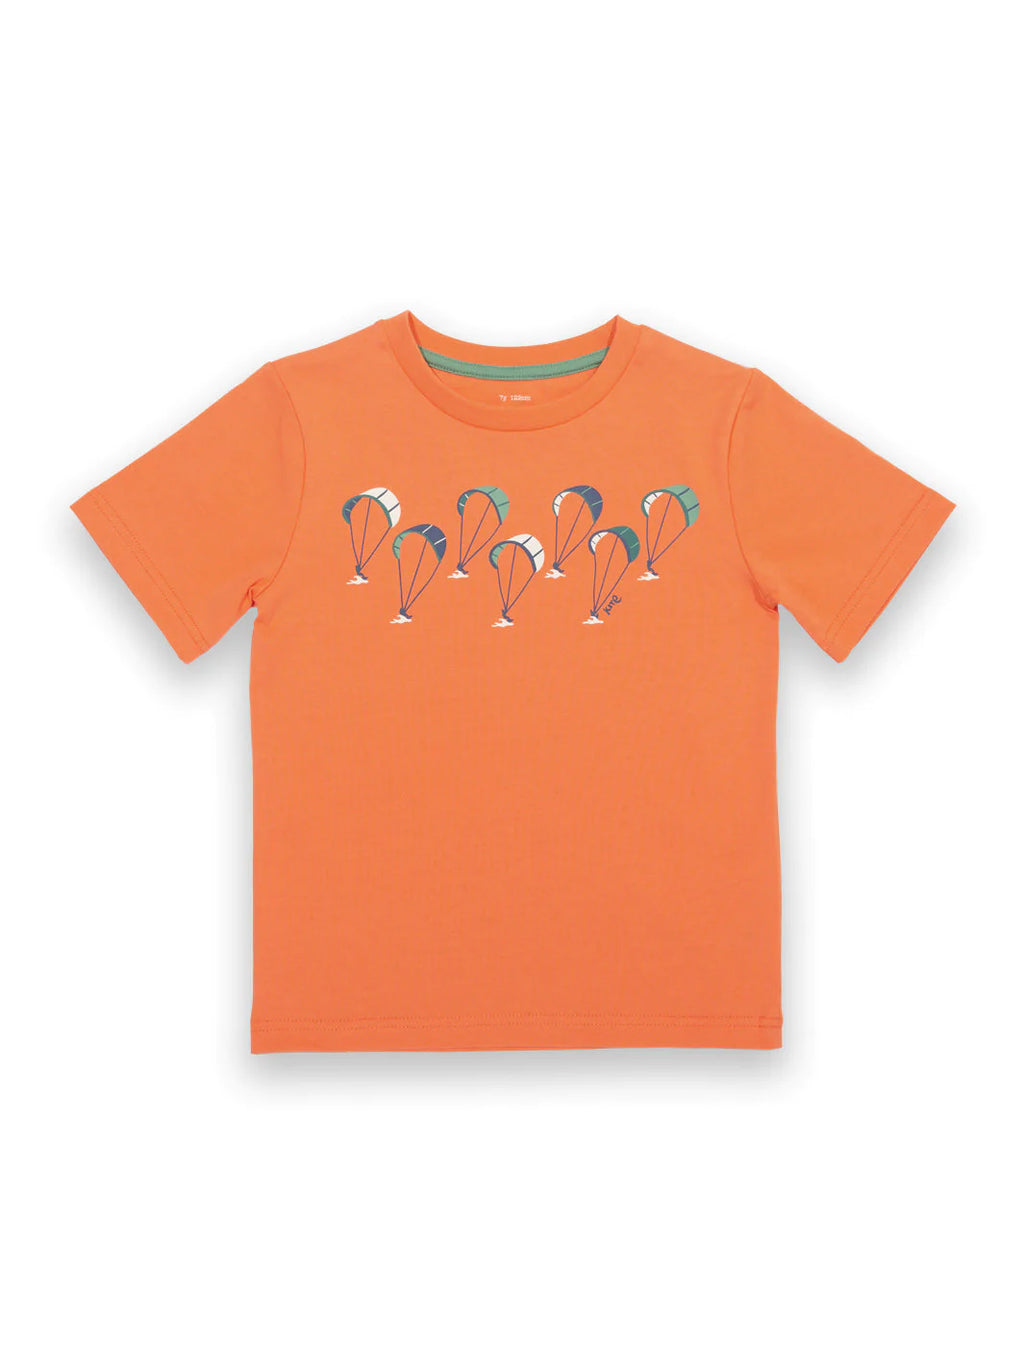 Kite Boys Surfer T-shirt Orange Short Sleeved Top | New Season | SALE